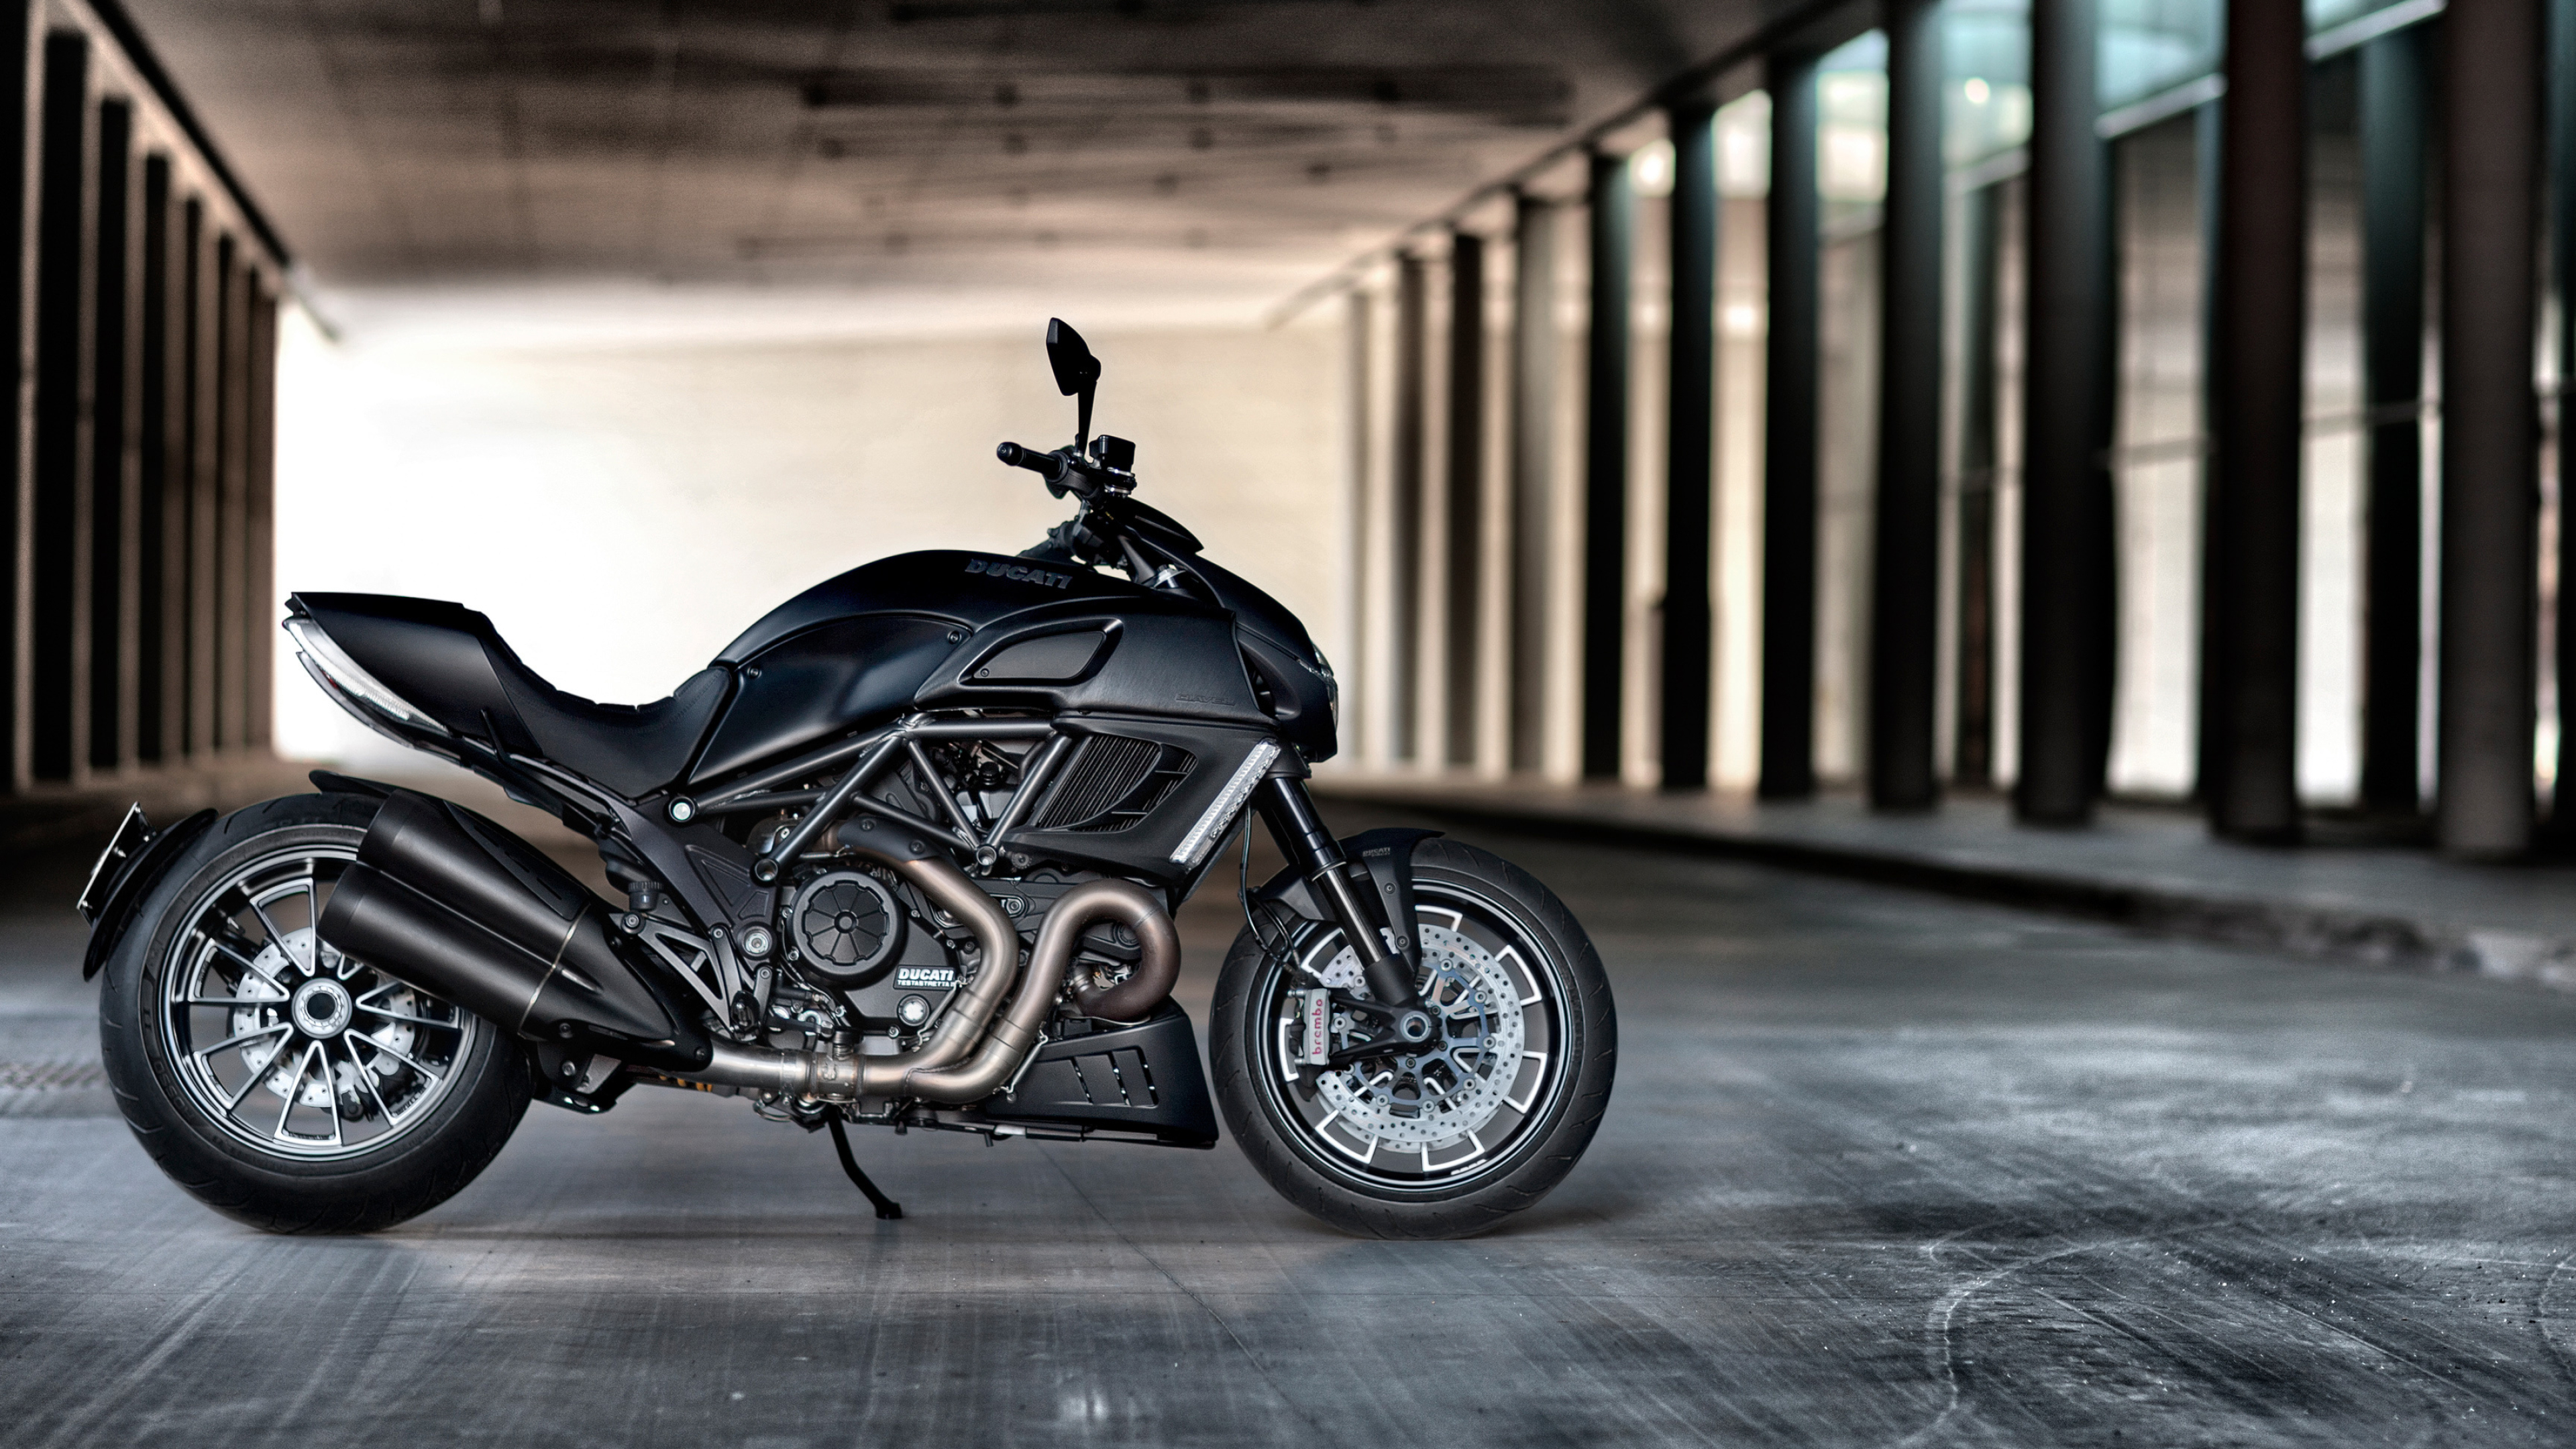 Ducati XDiavel, Motorcycle power, 4K Ultra HD, Thrilling ride, 3840x2160 4K Desktop